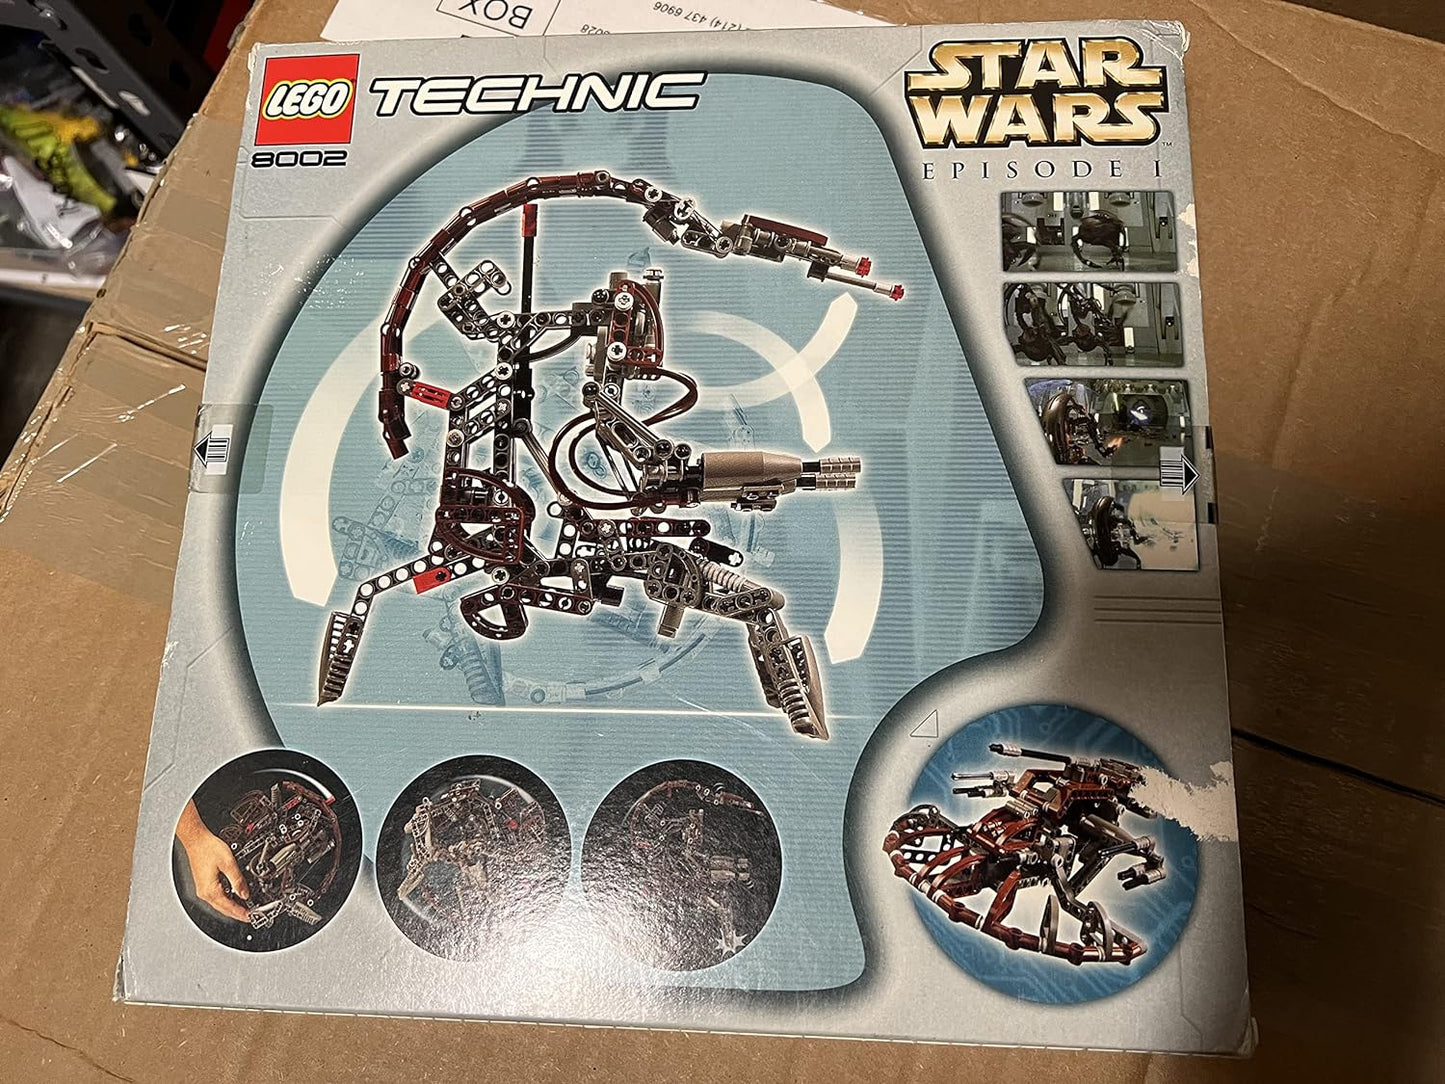 LEGO Star Wars Destroyer Droid (8002)